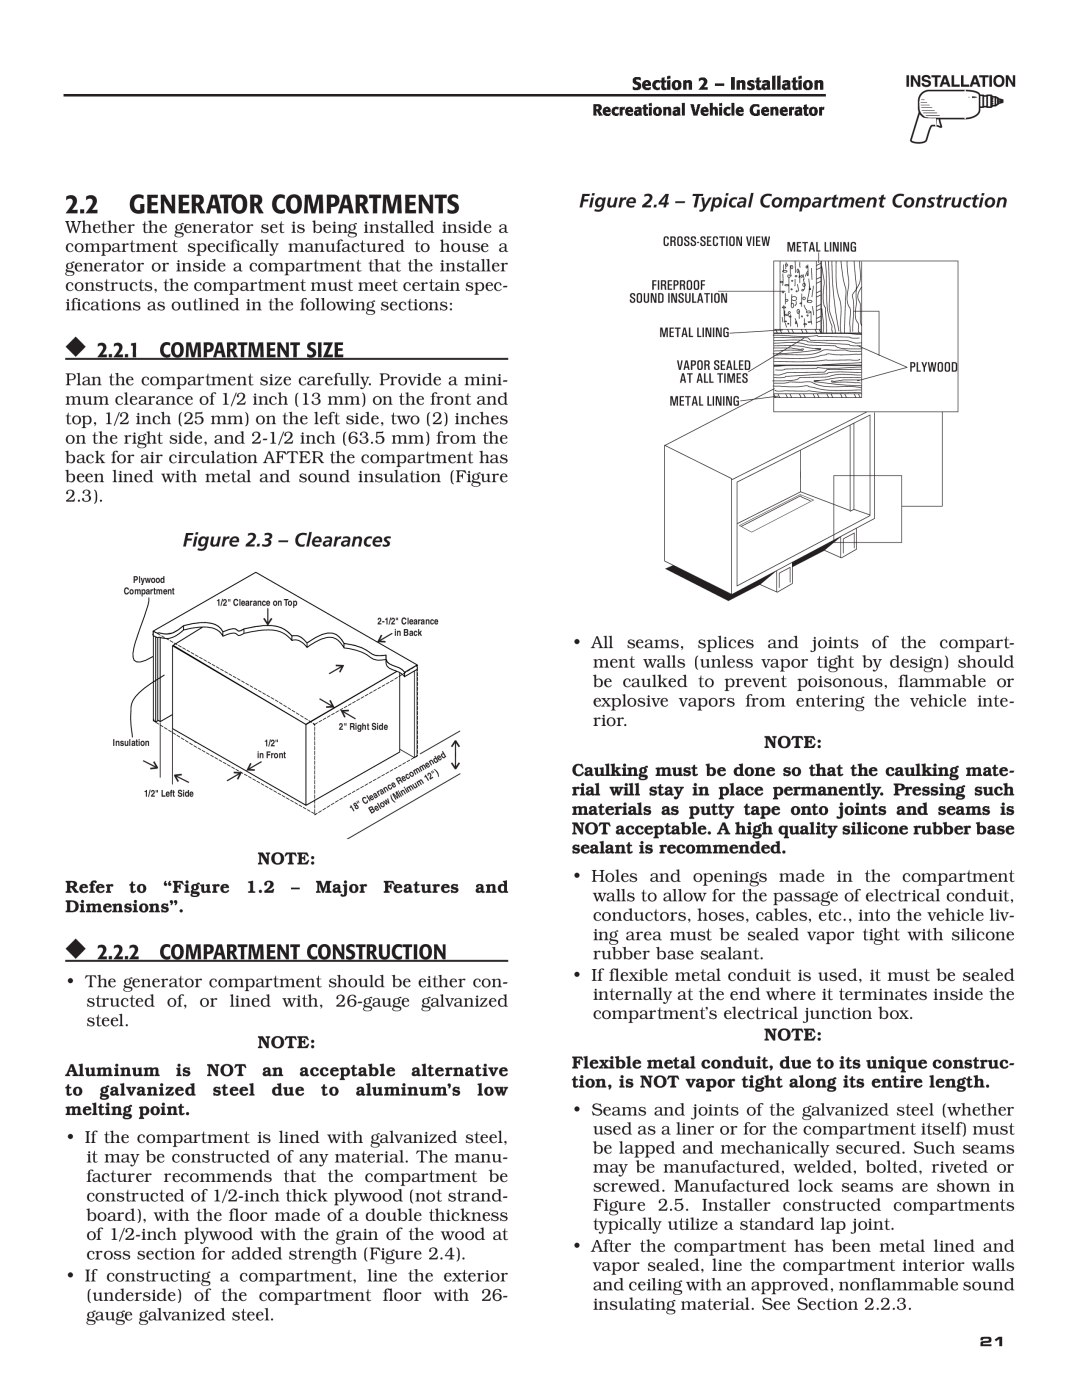 Guardian Technologies 004701-0 2.2Generator Compartments, 2.2.1 COMPARTMENT SIZE, 2.2.2 COMPARTMENT Construction 